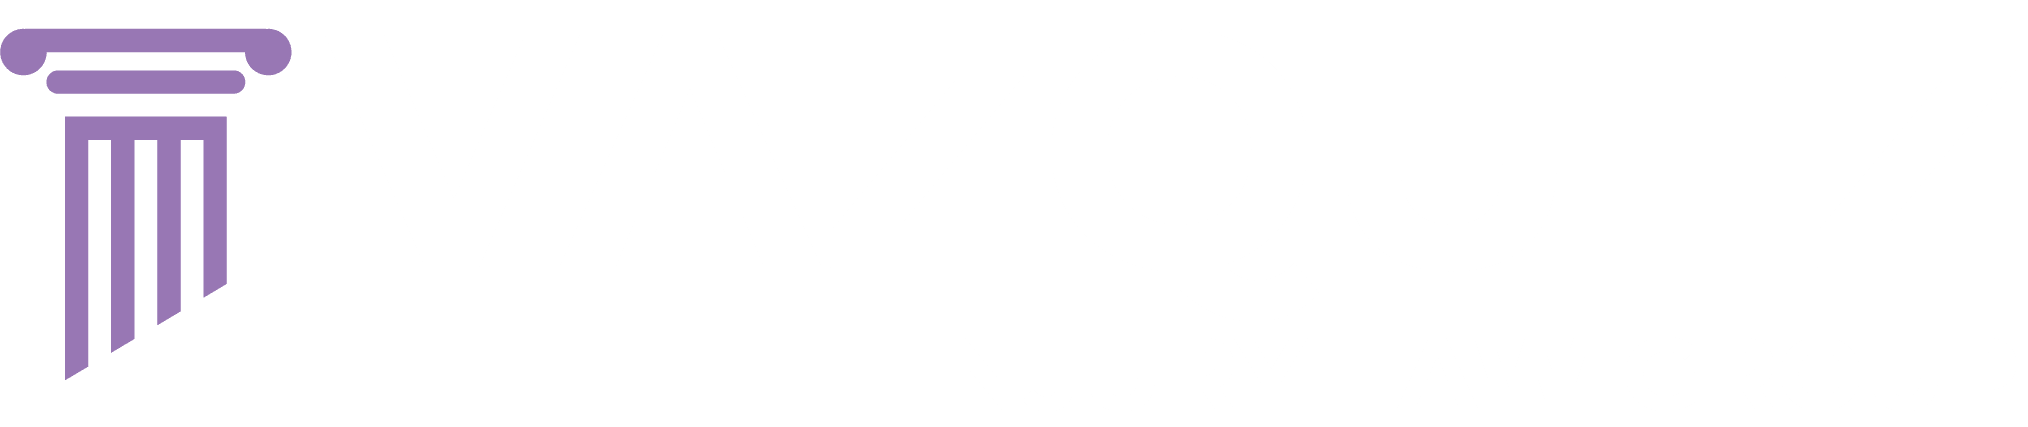 Vazquez Injury Law Group